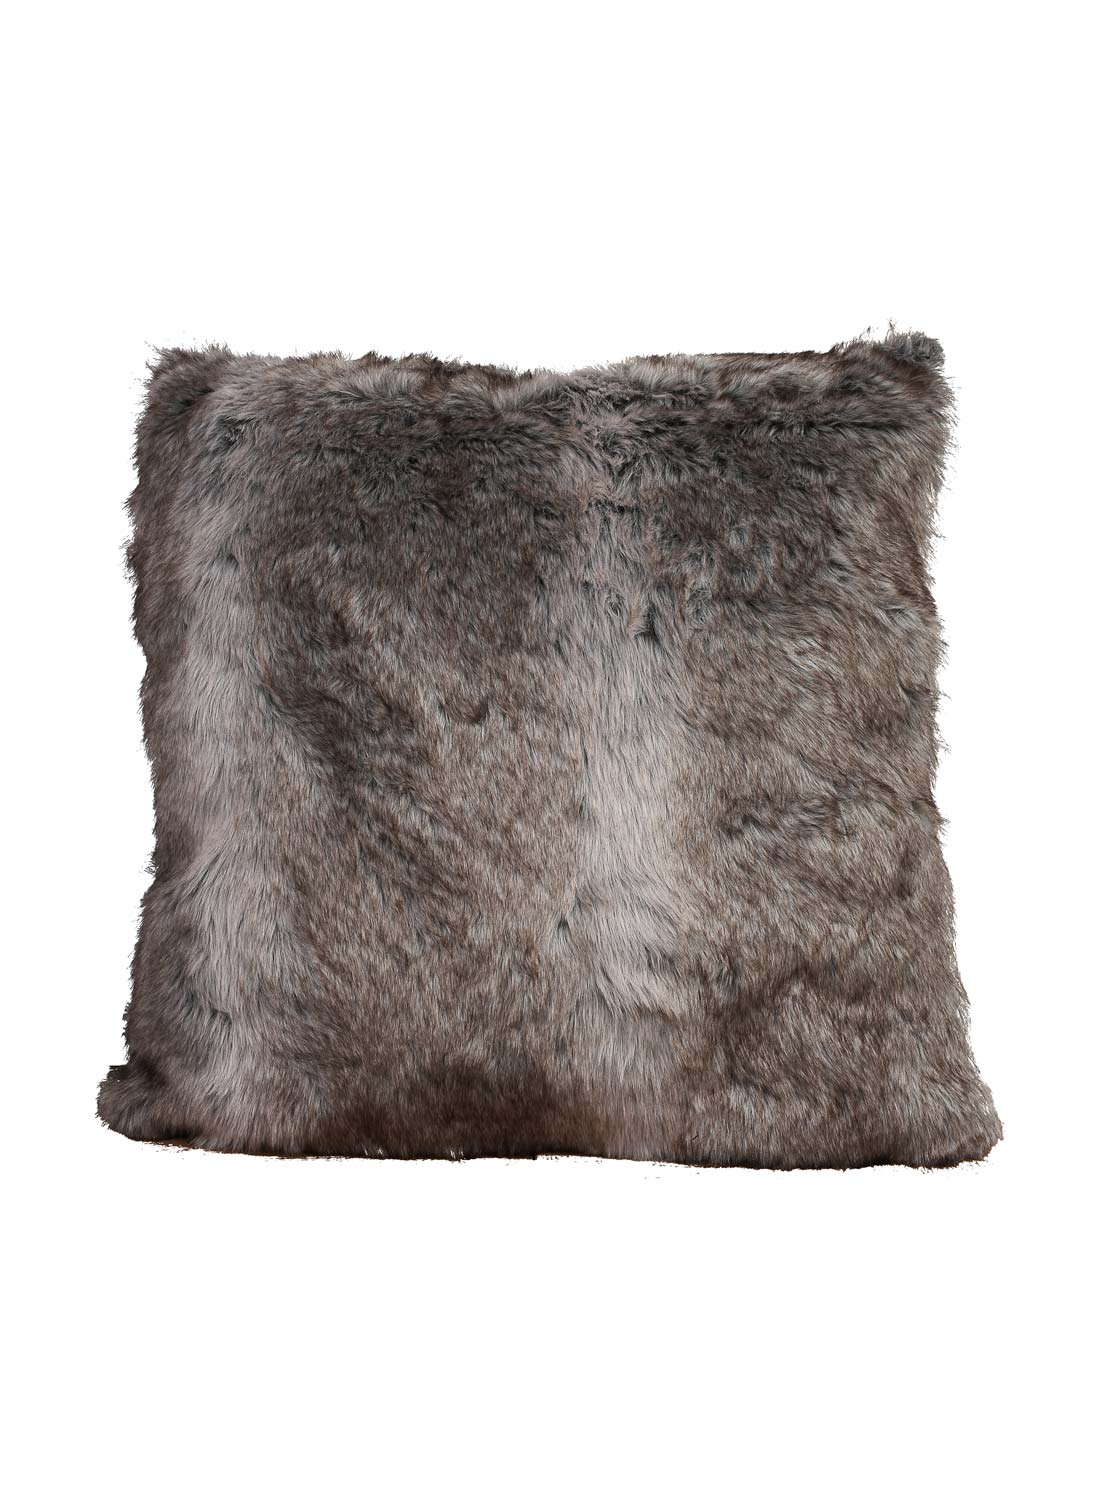 Fur pillow 50x50cm